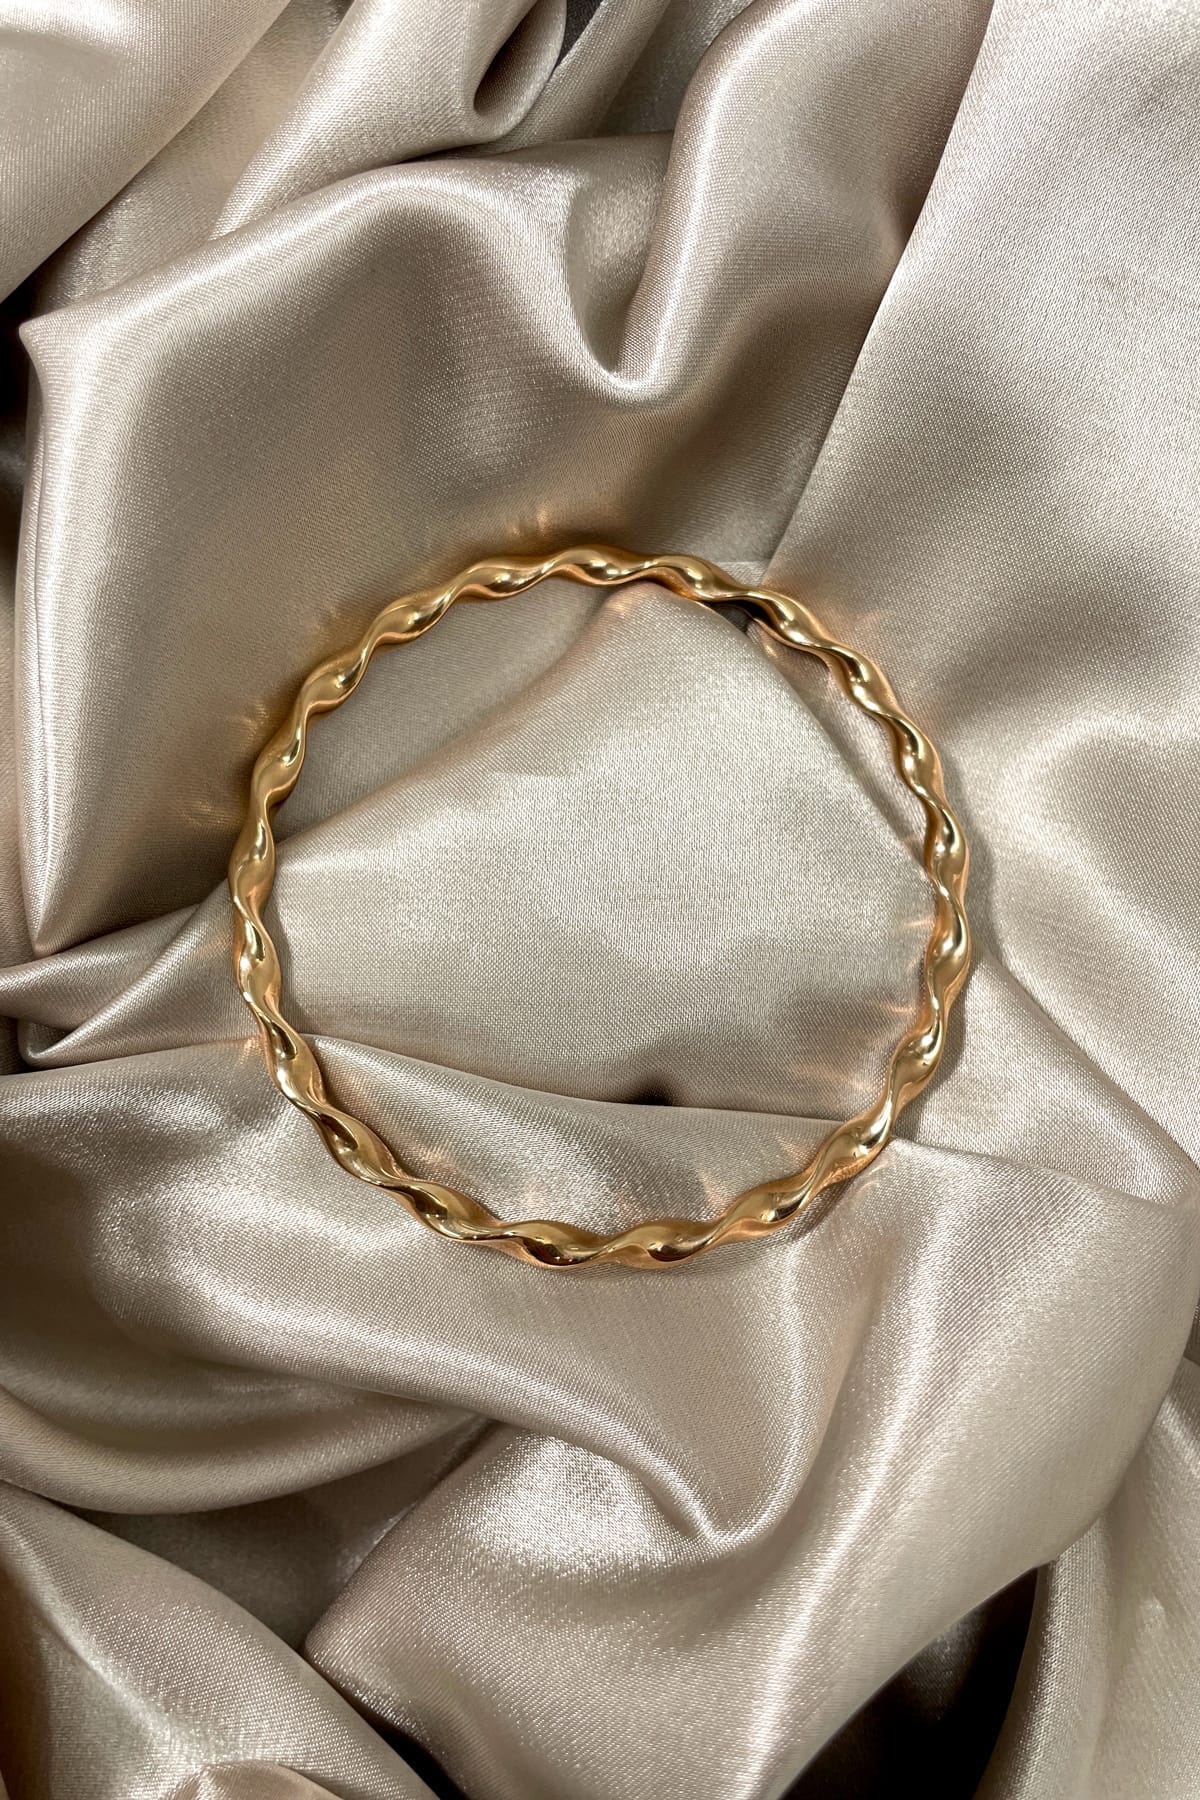 9 Carat Rose Gold Solid Wave Plain Bangle available at LeGassick Diamonds and Jewellery Gold Coast, Australia.